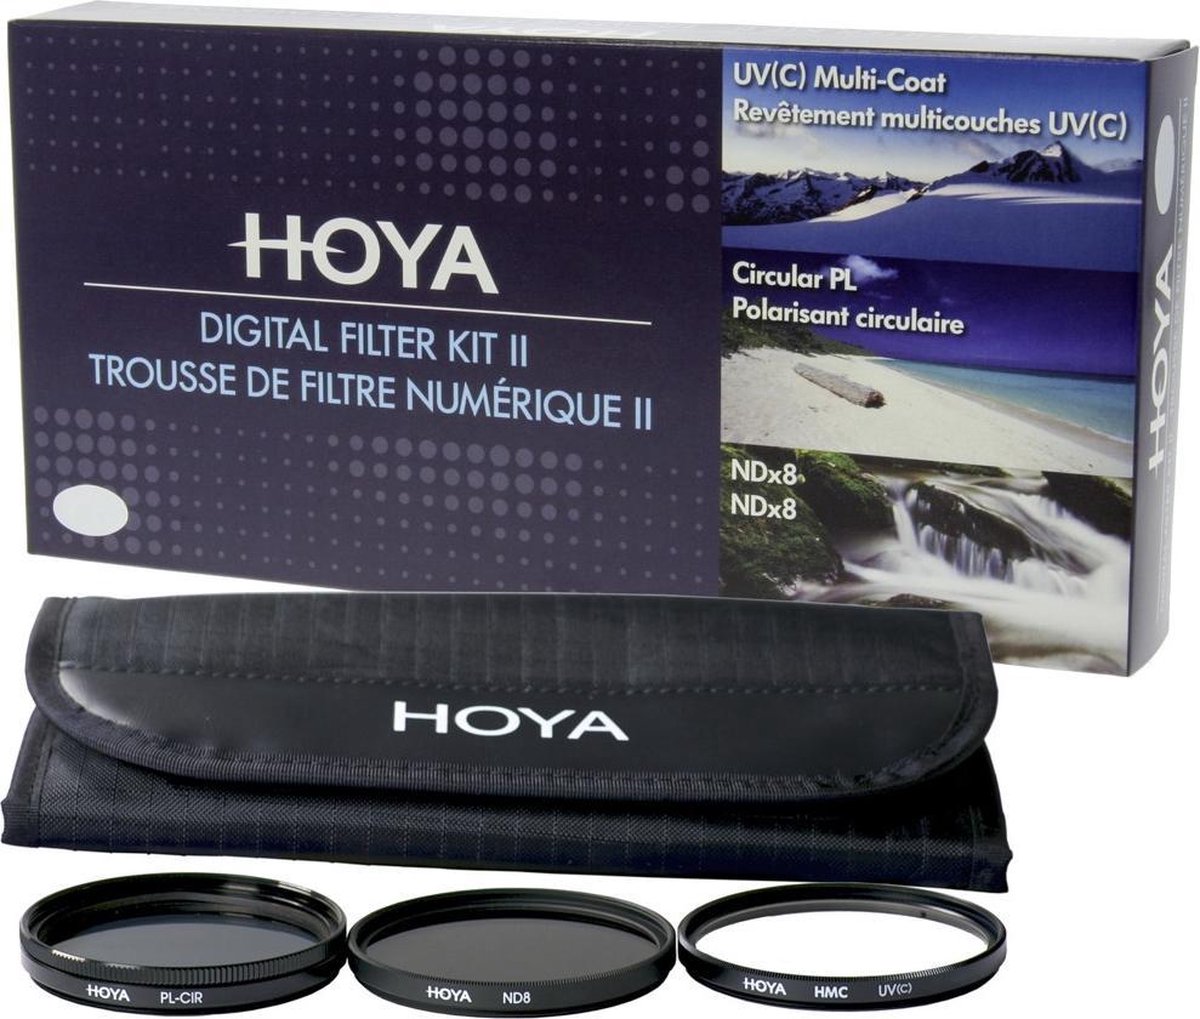 Hoya Digital Filter Introduction Kit 37mm